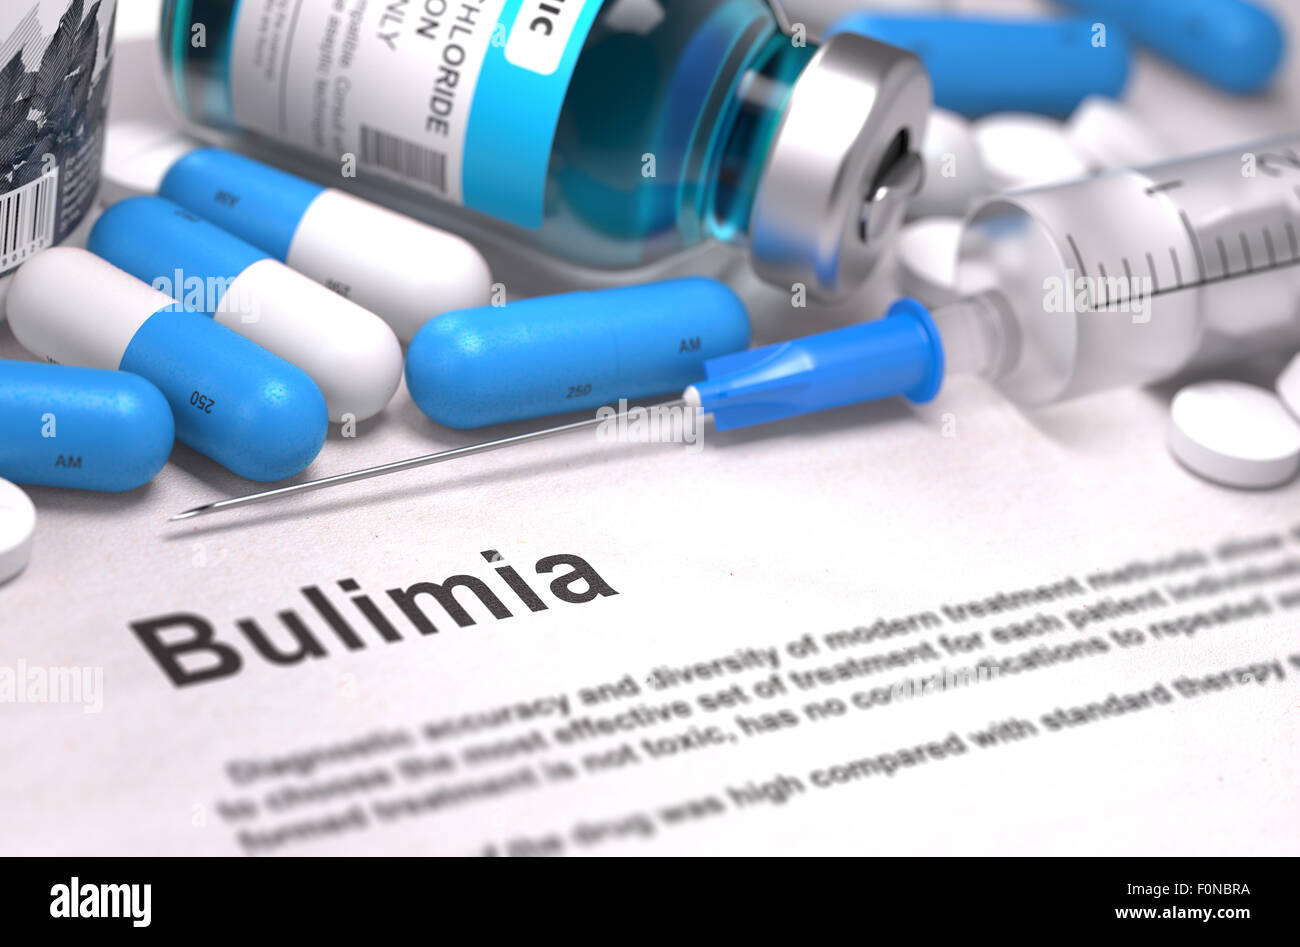 Diagnosis - Bulimia. Medical Concept. Stock Photo